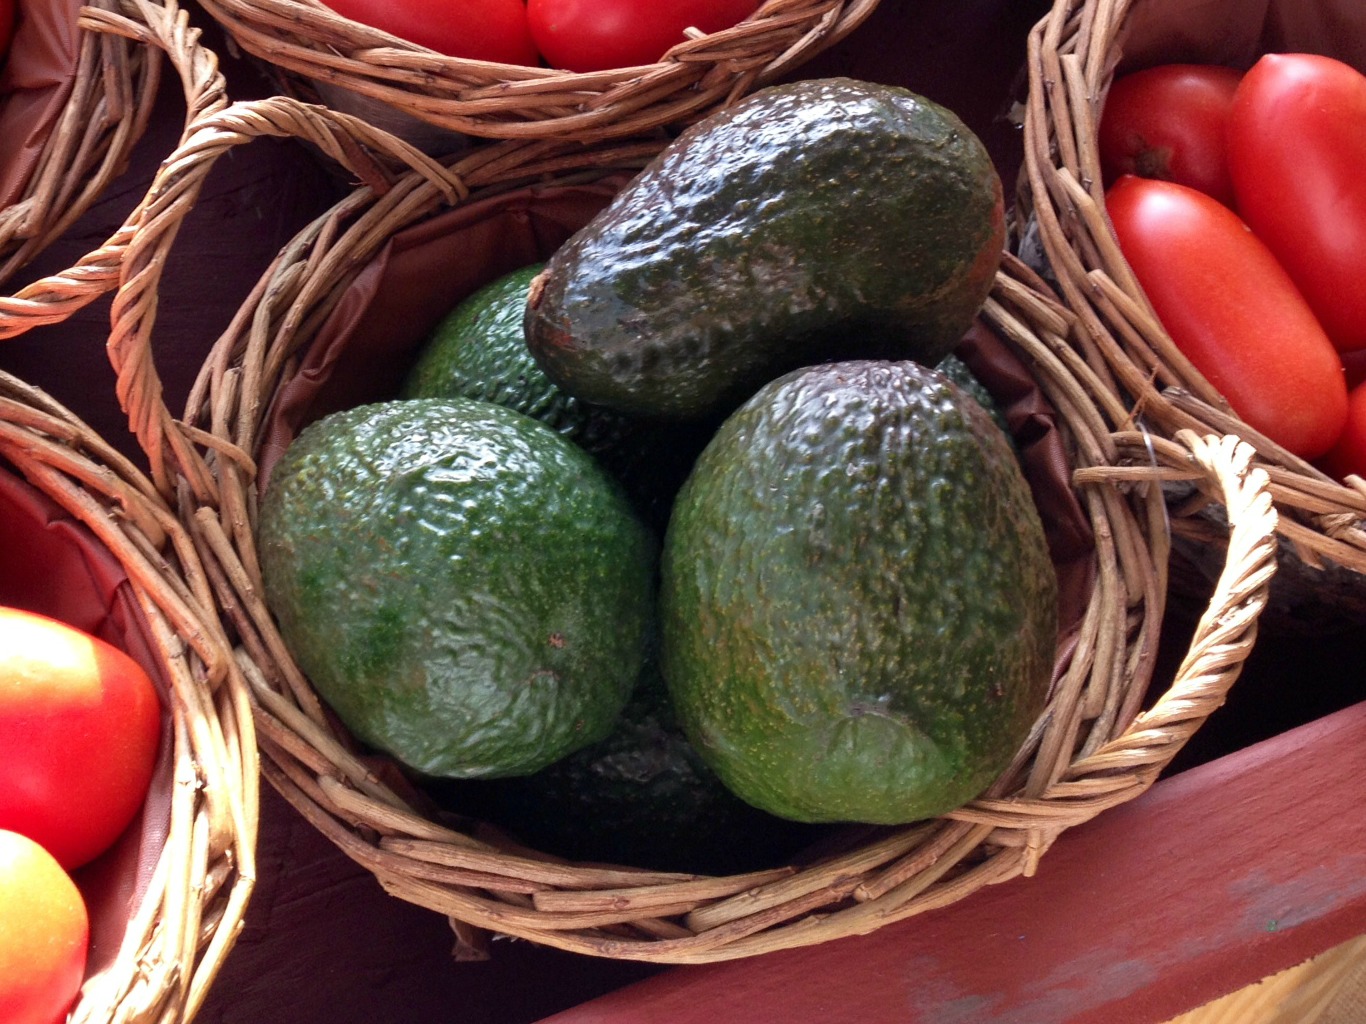 Avocados in a basket